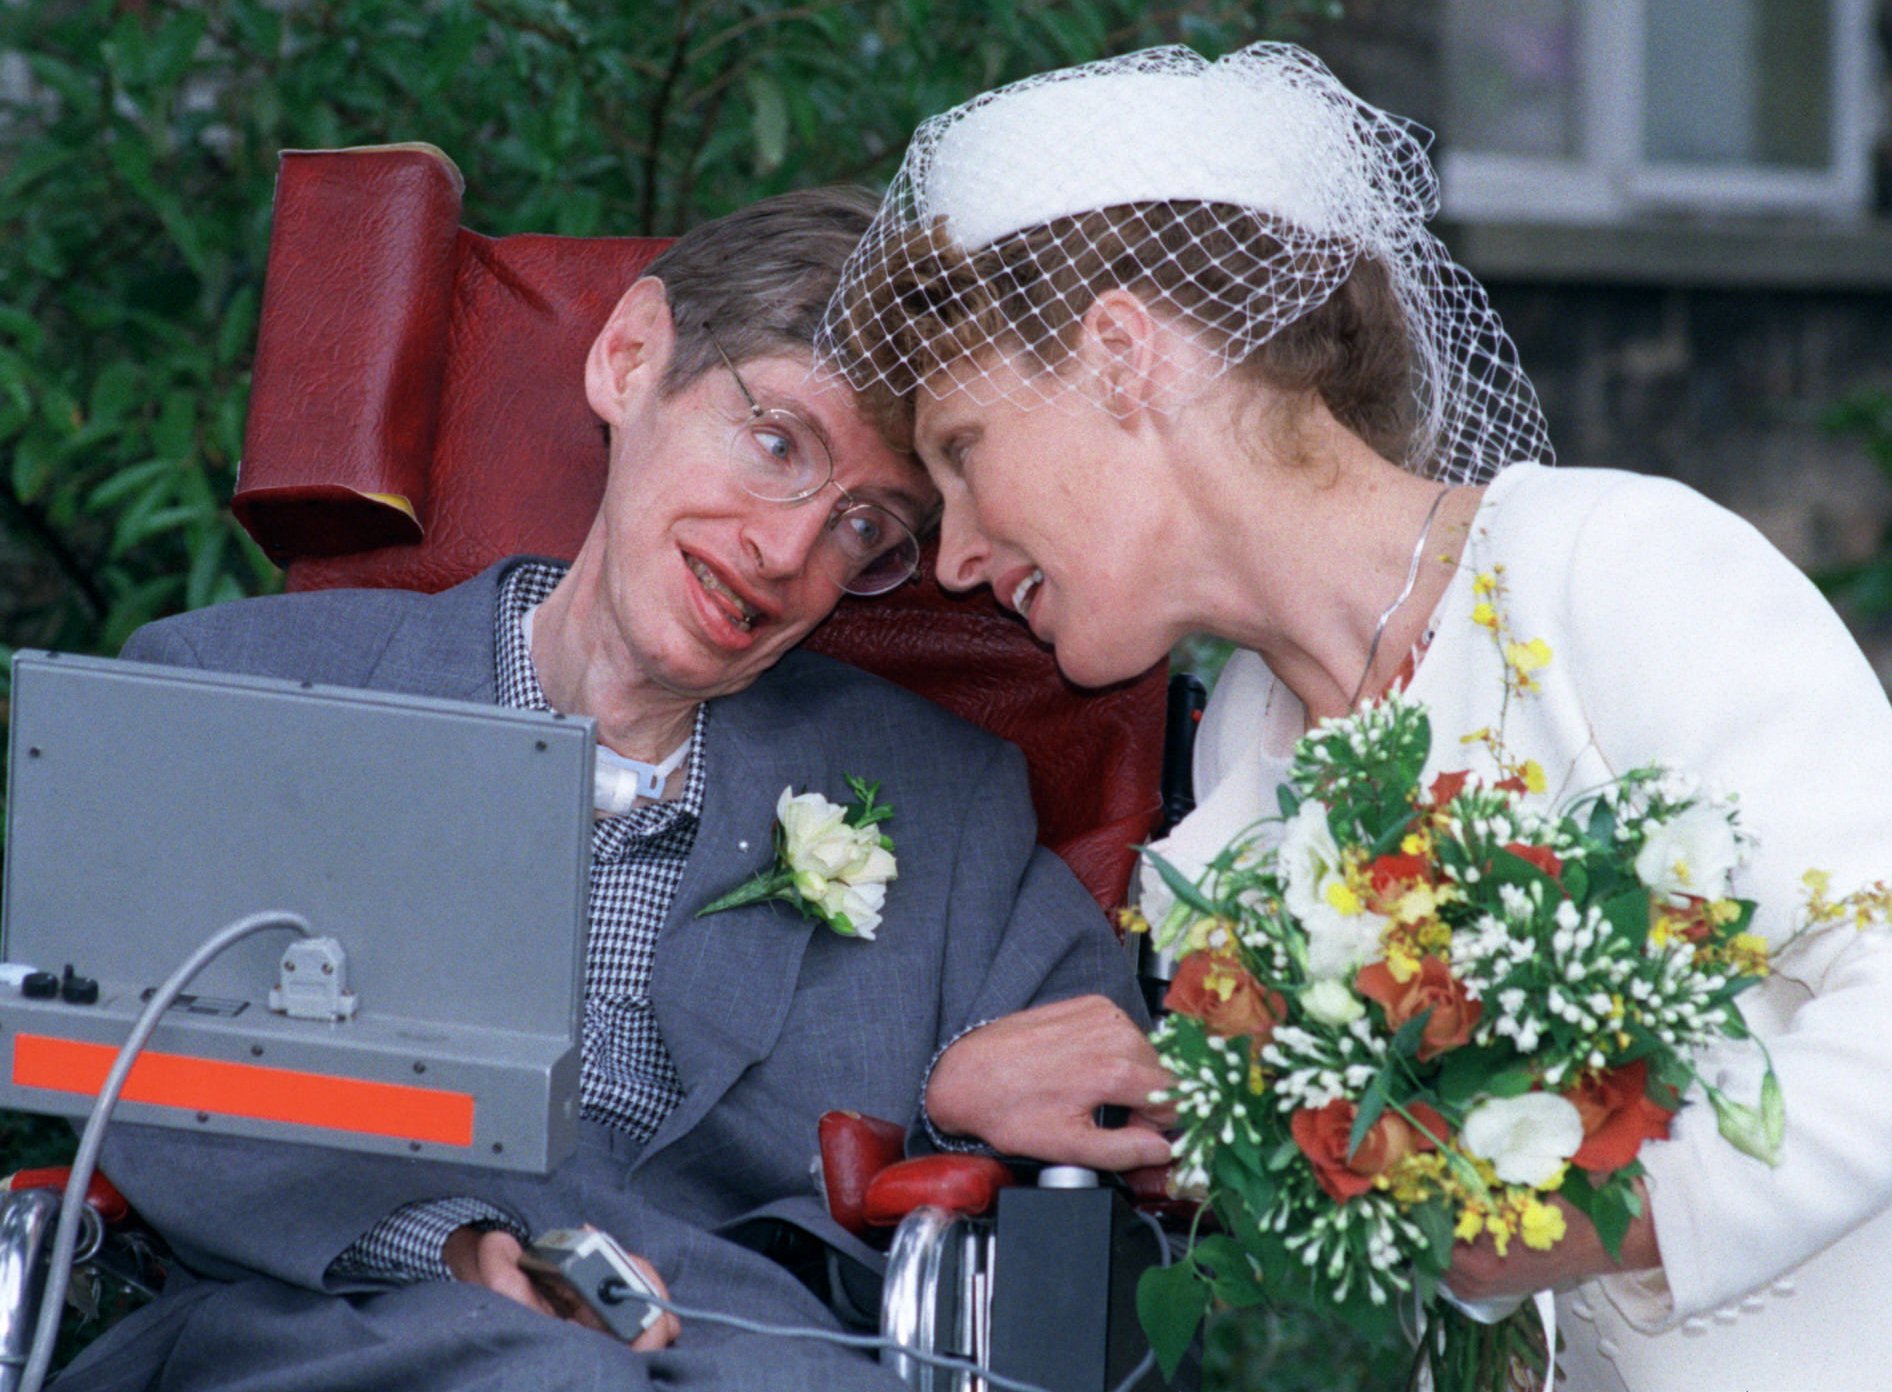 Married when was stephen hawking Stephen Hawking